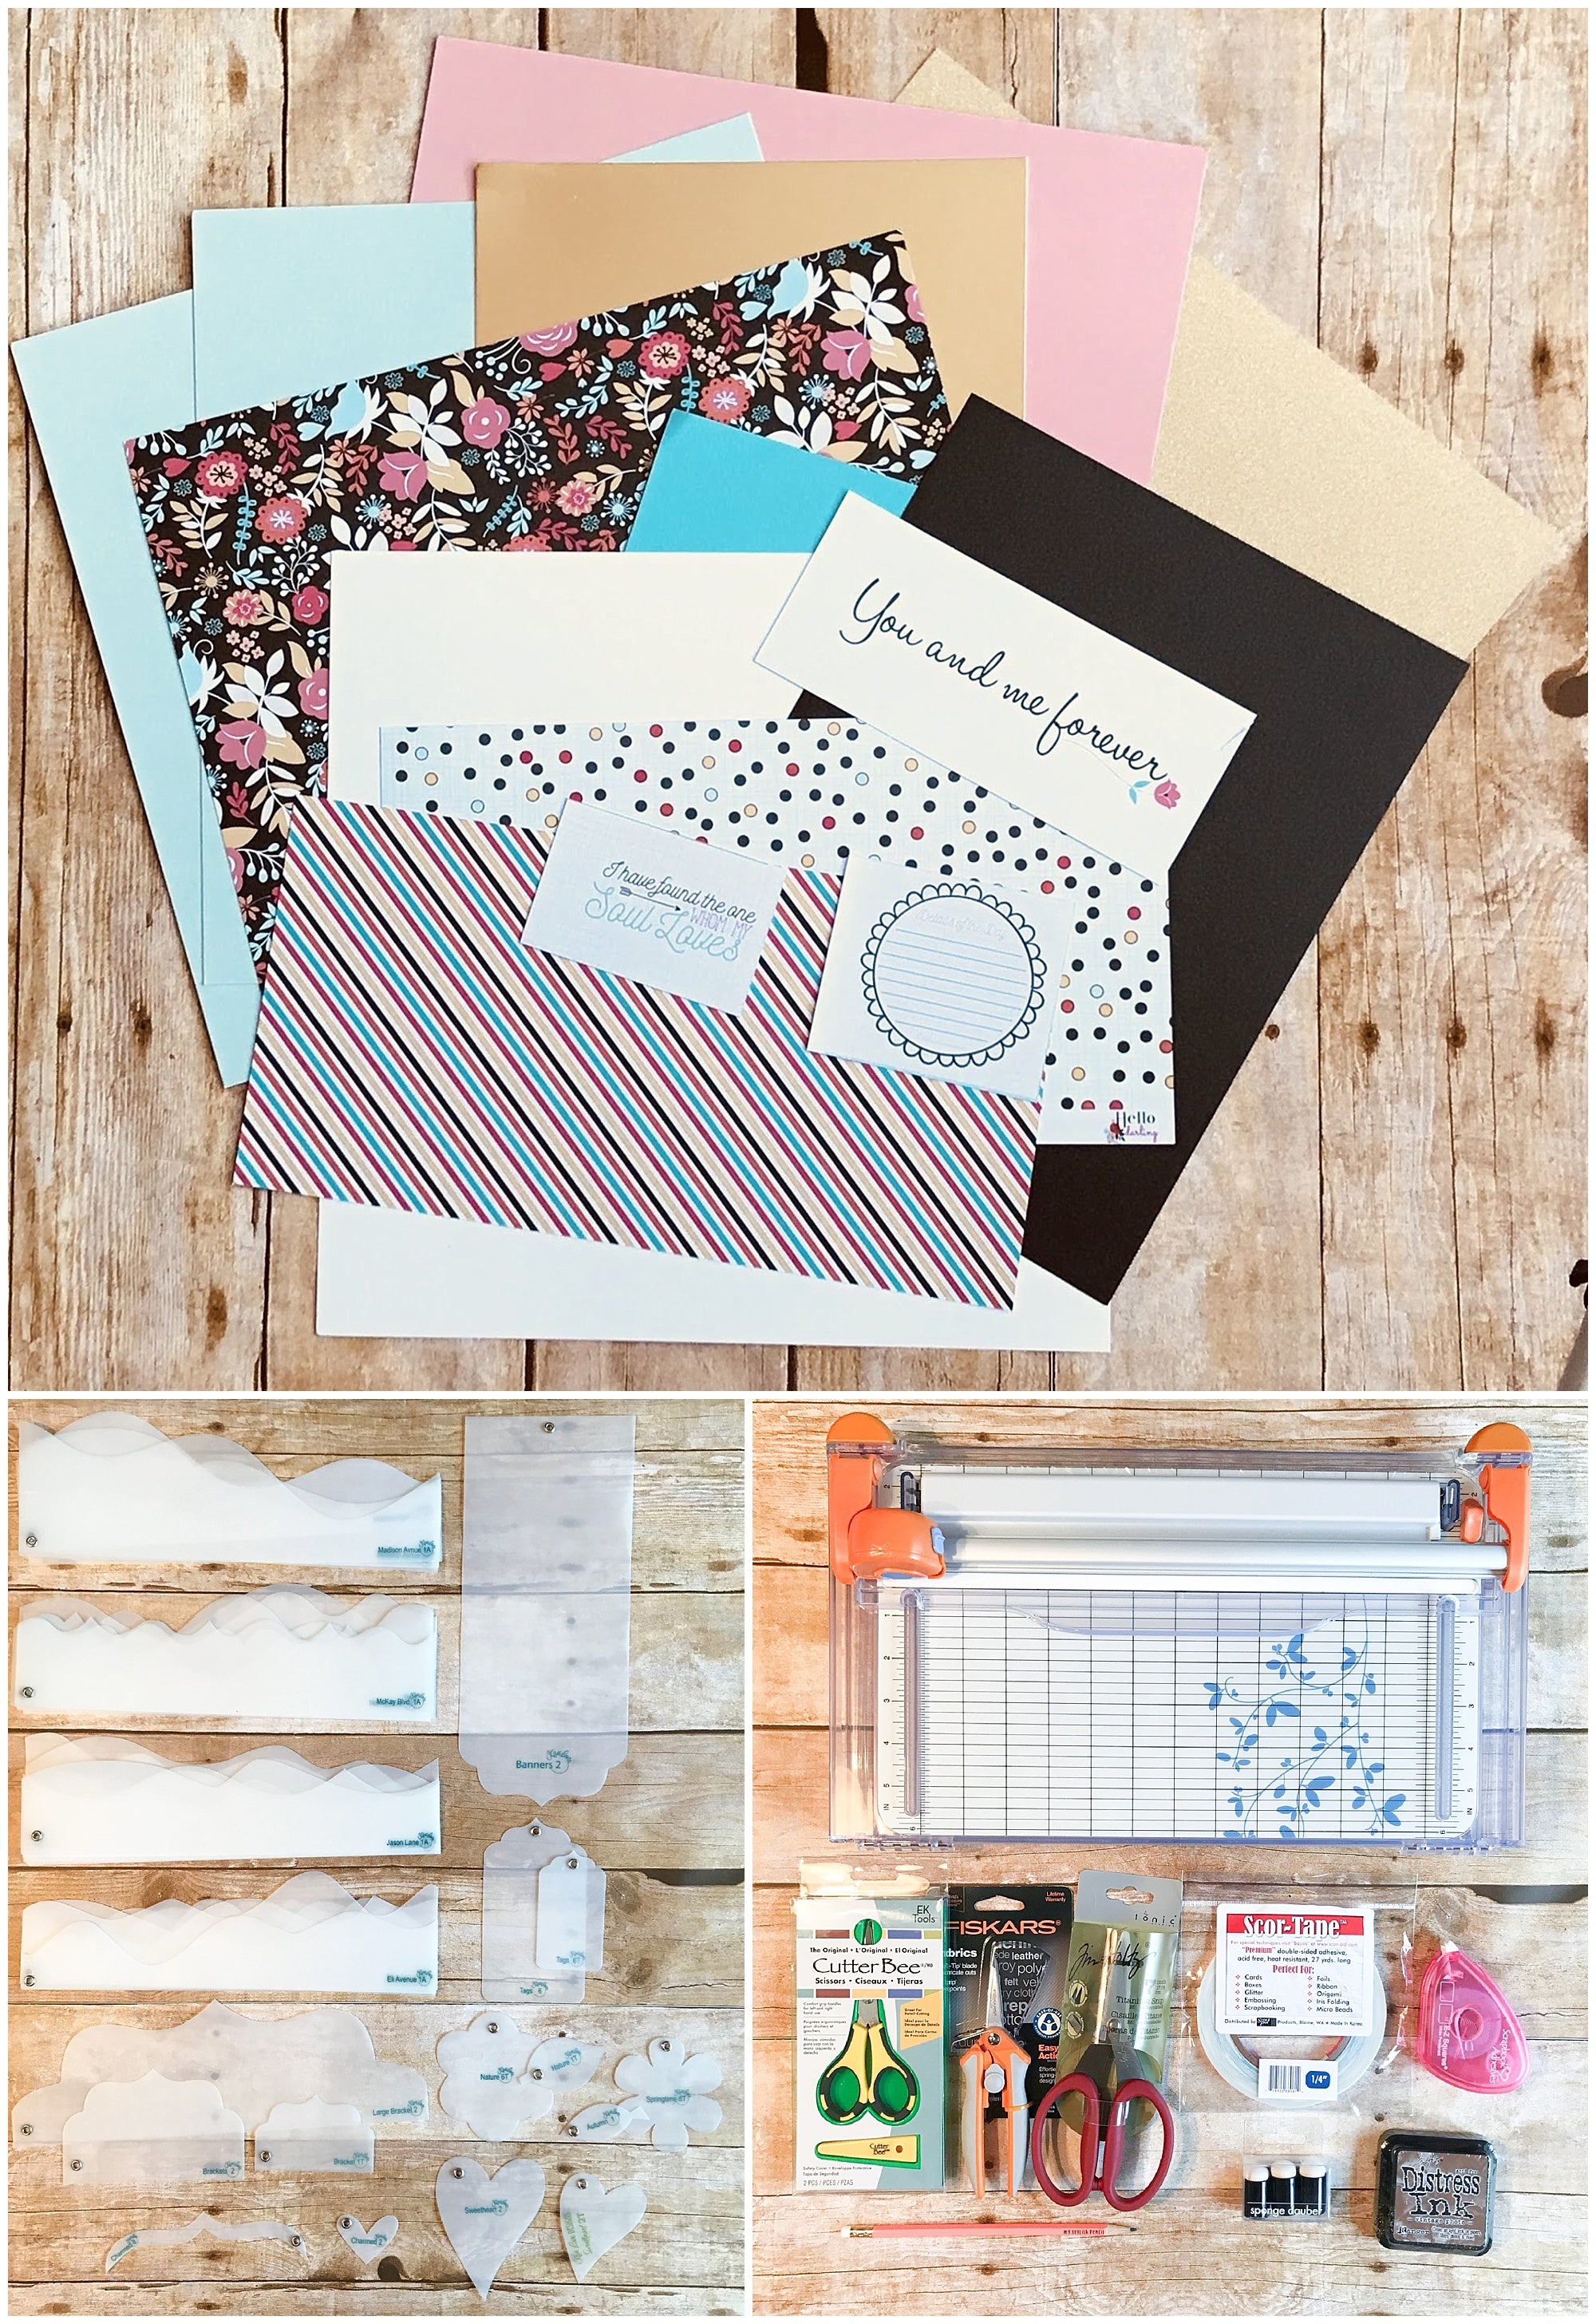 Mulberry Paper 8.5 x 6 - Blue  Scrapbooking & craft supplies